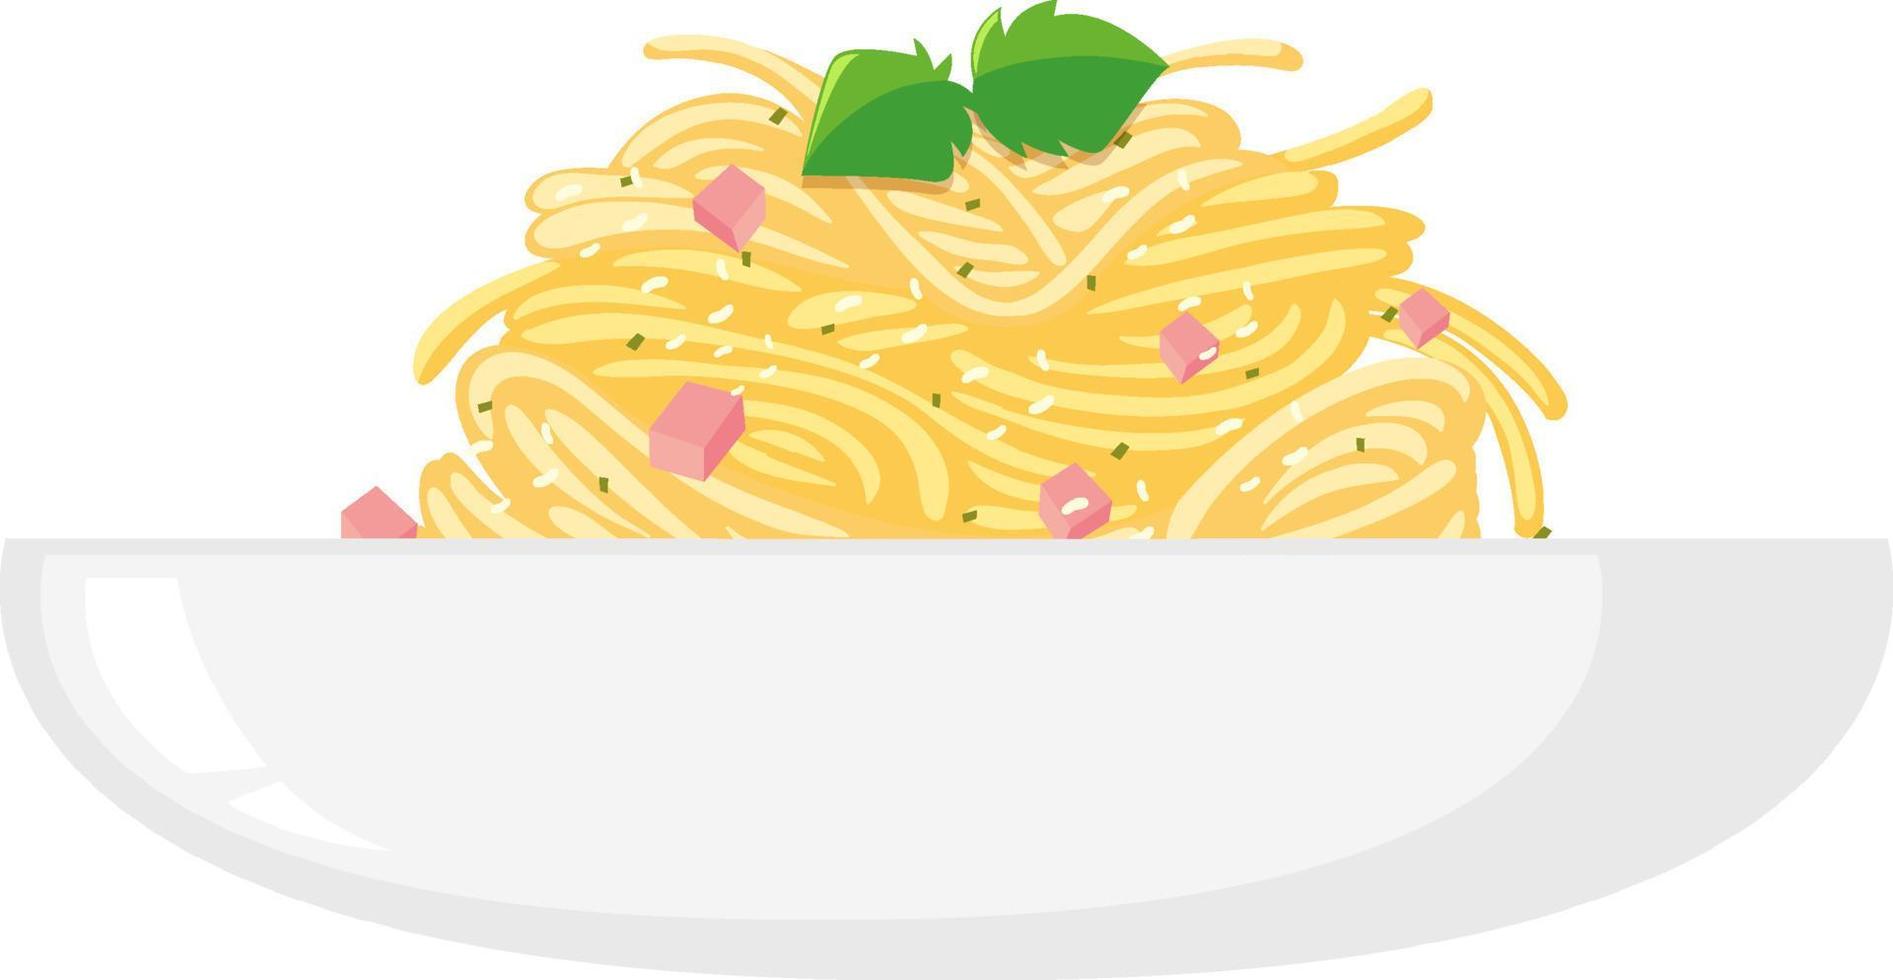 Spaghetti carbonara in a bowl vector